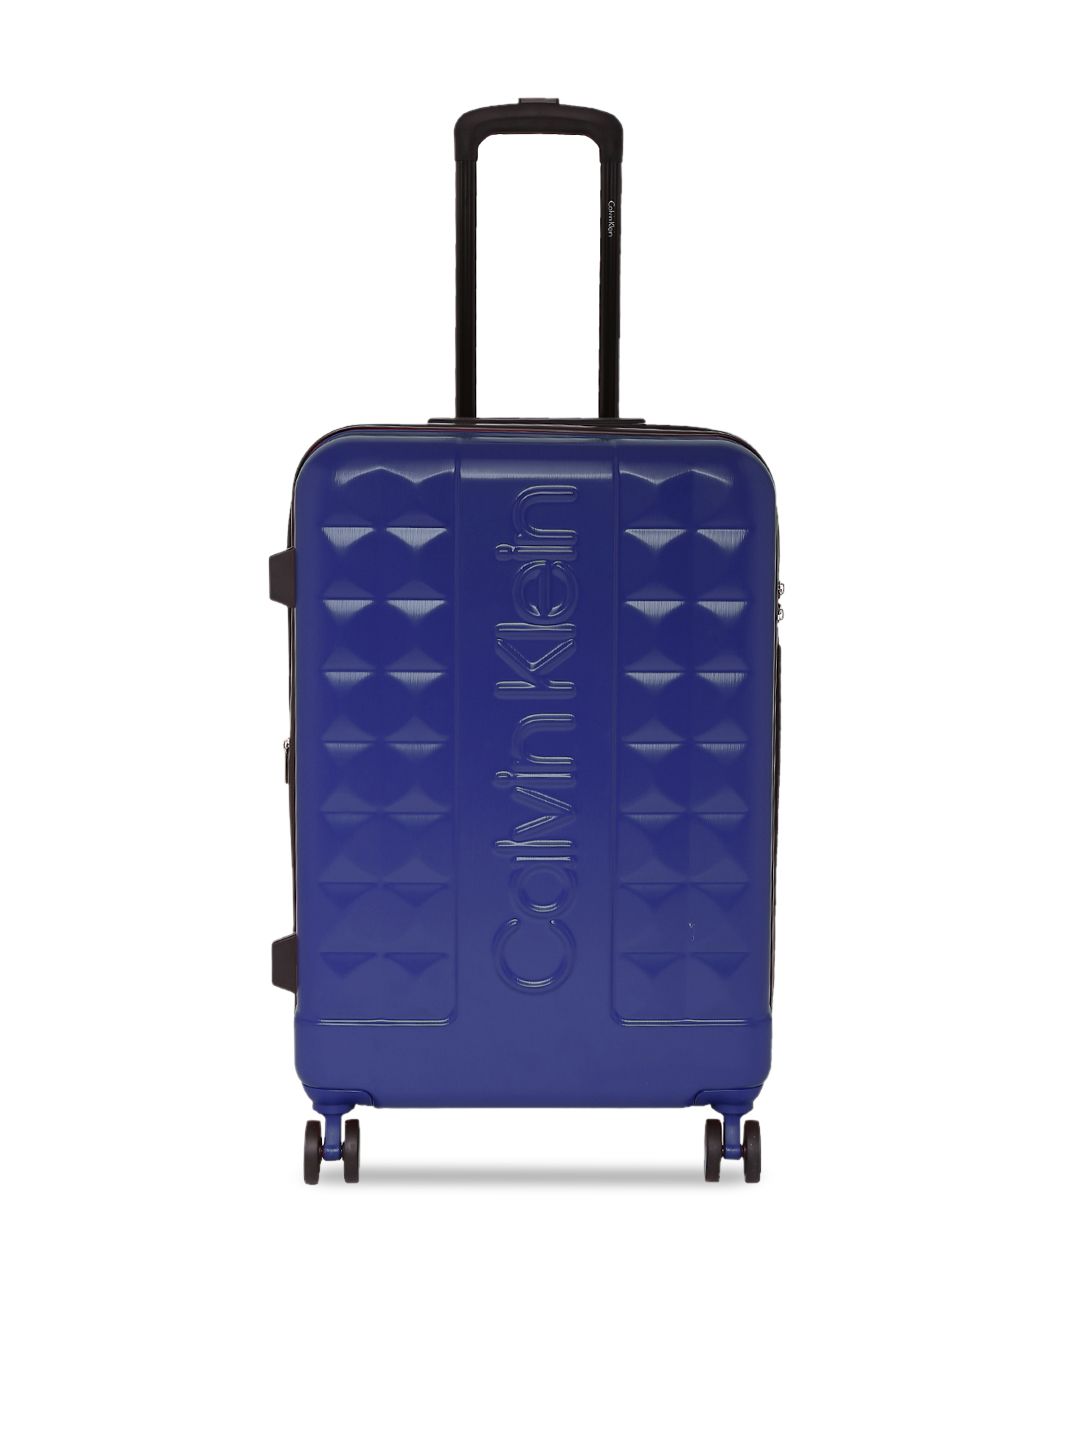 Calvin Klein CENTRAL PARK WEST Range Blue  Hard Cabin Luggage Price in India